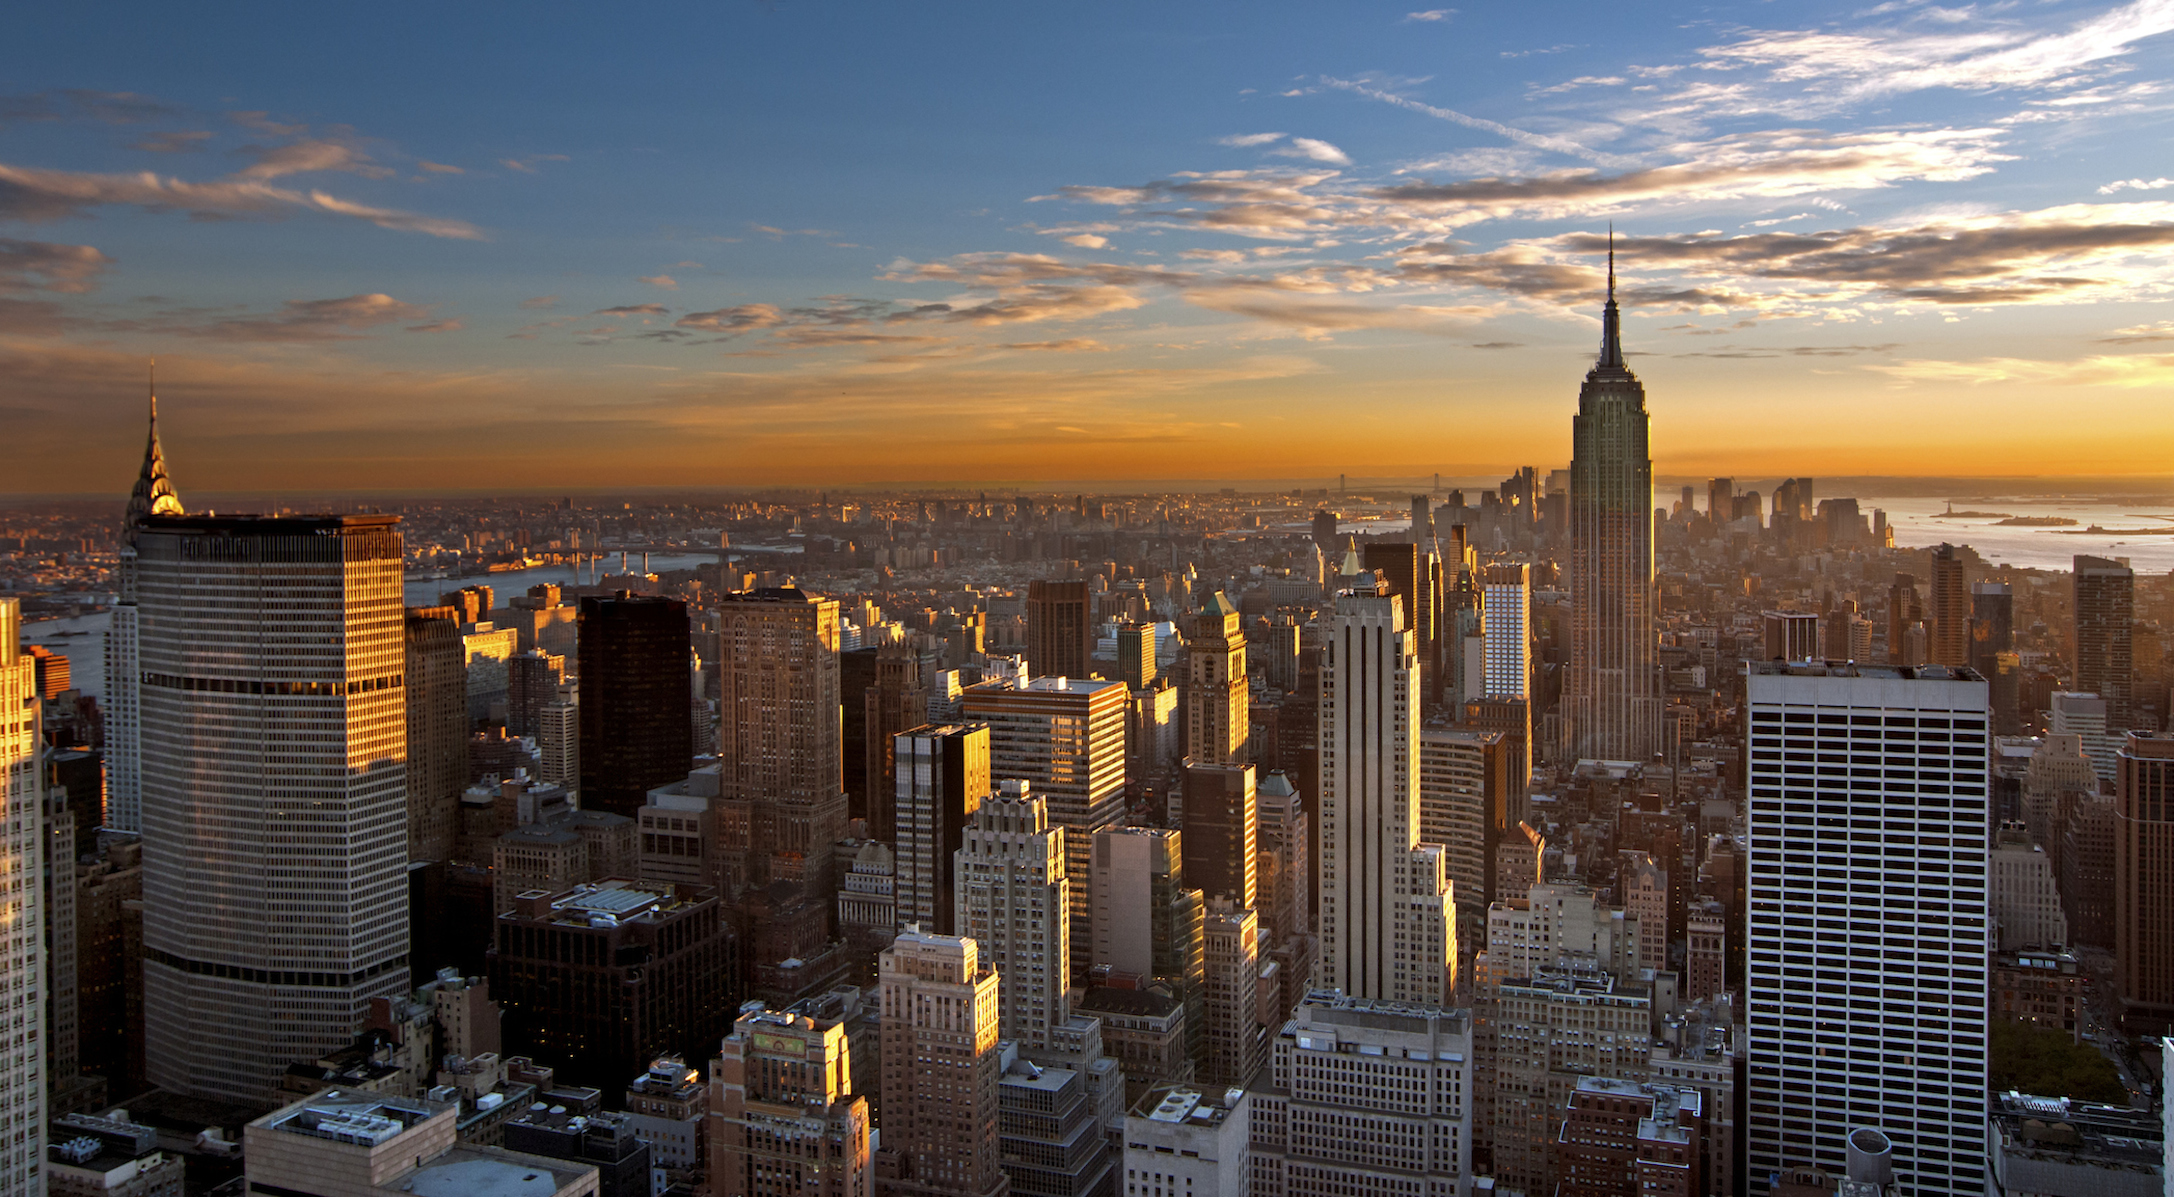 new york sunset manhattan 2416 x 1330px #